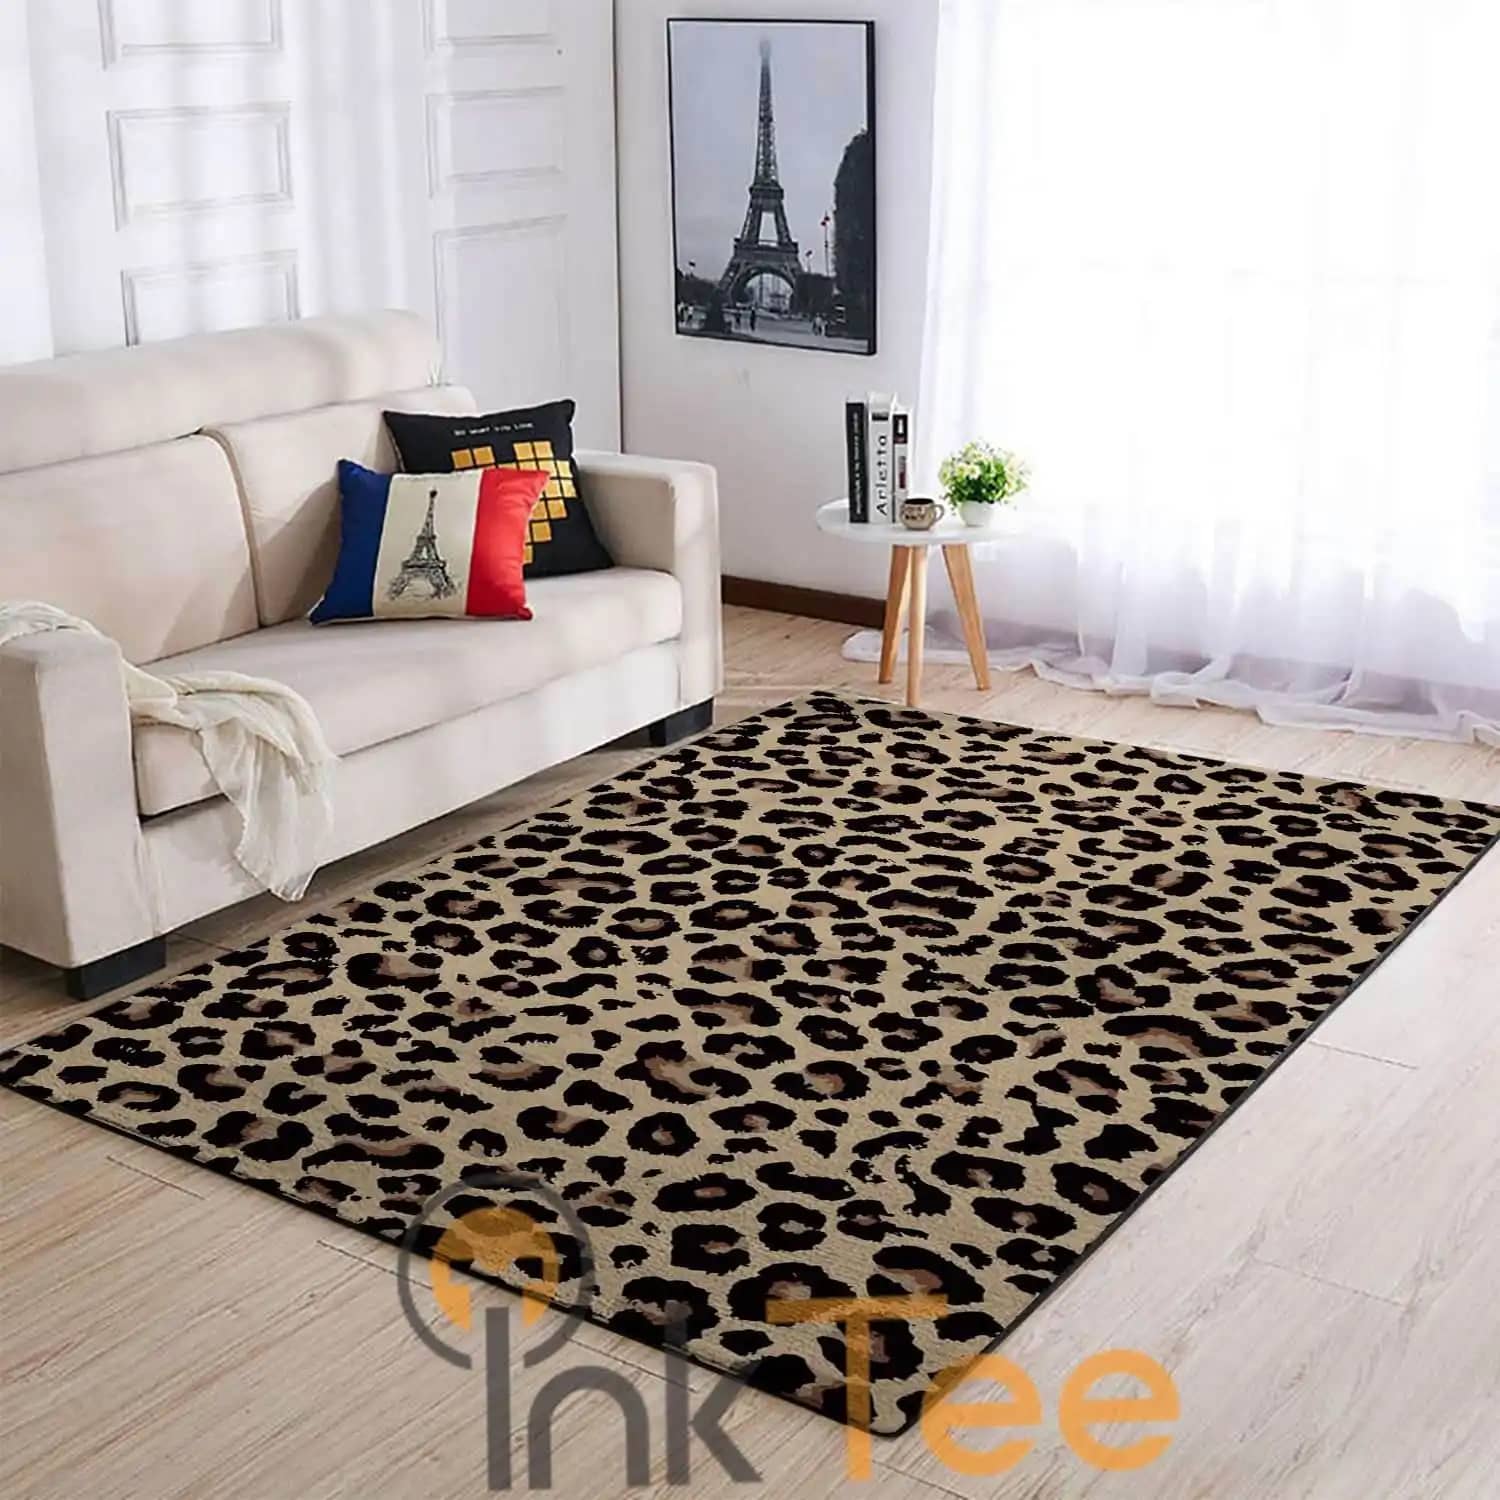 Leopard Skin Living Room Area Amazon No4012 Rug